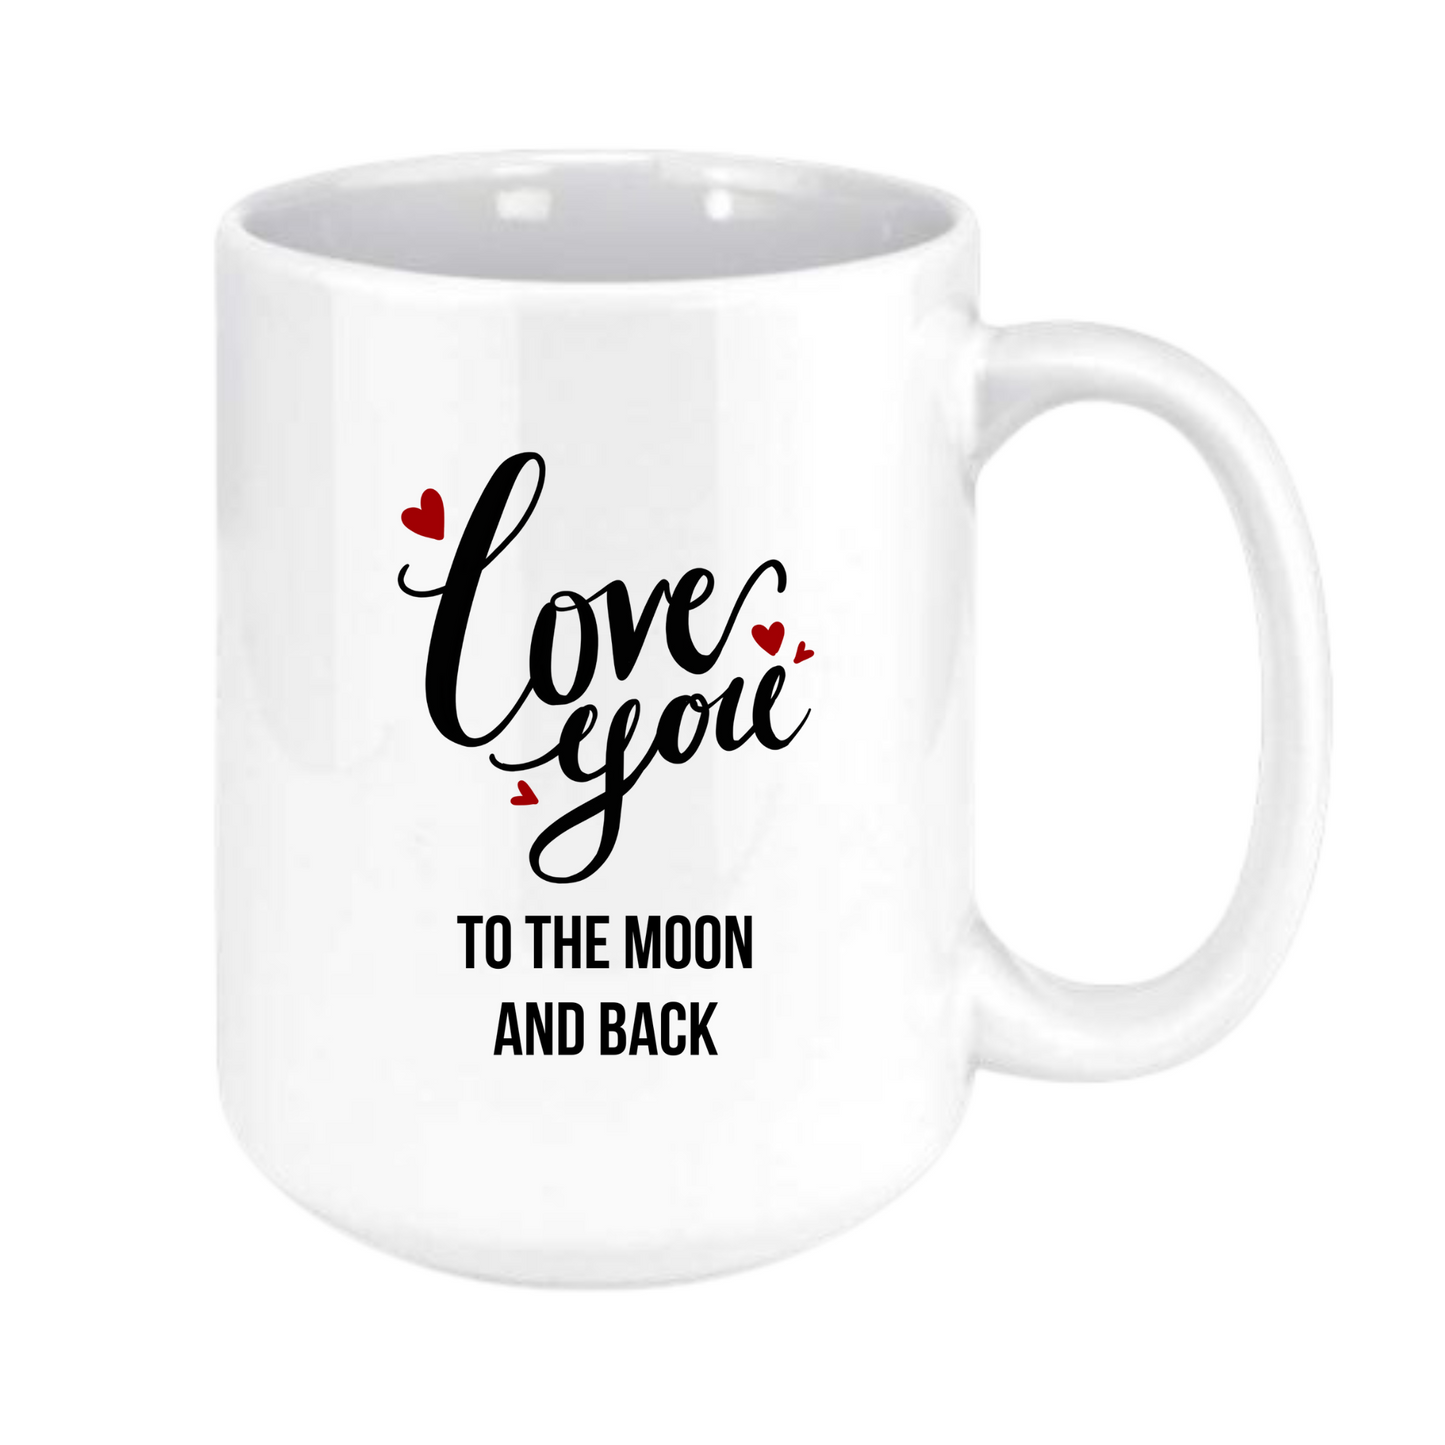 Love you to the moon and back mug